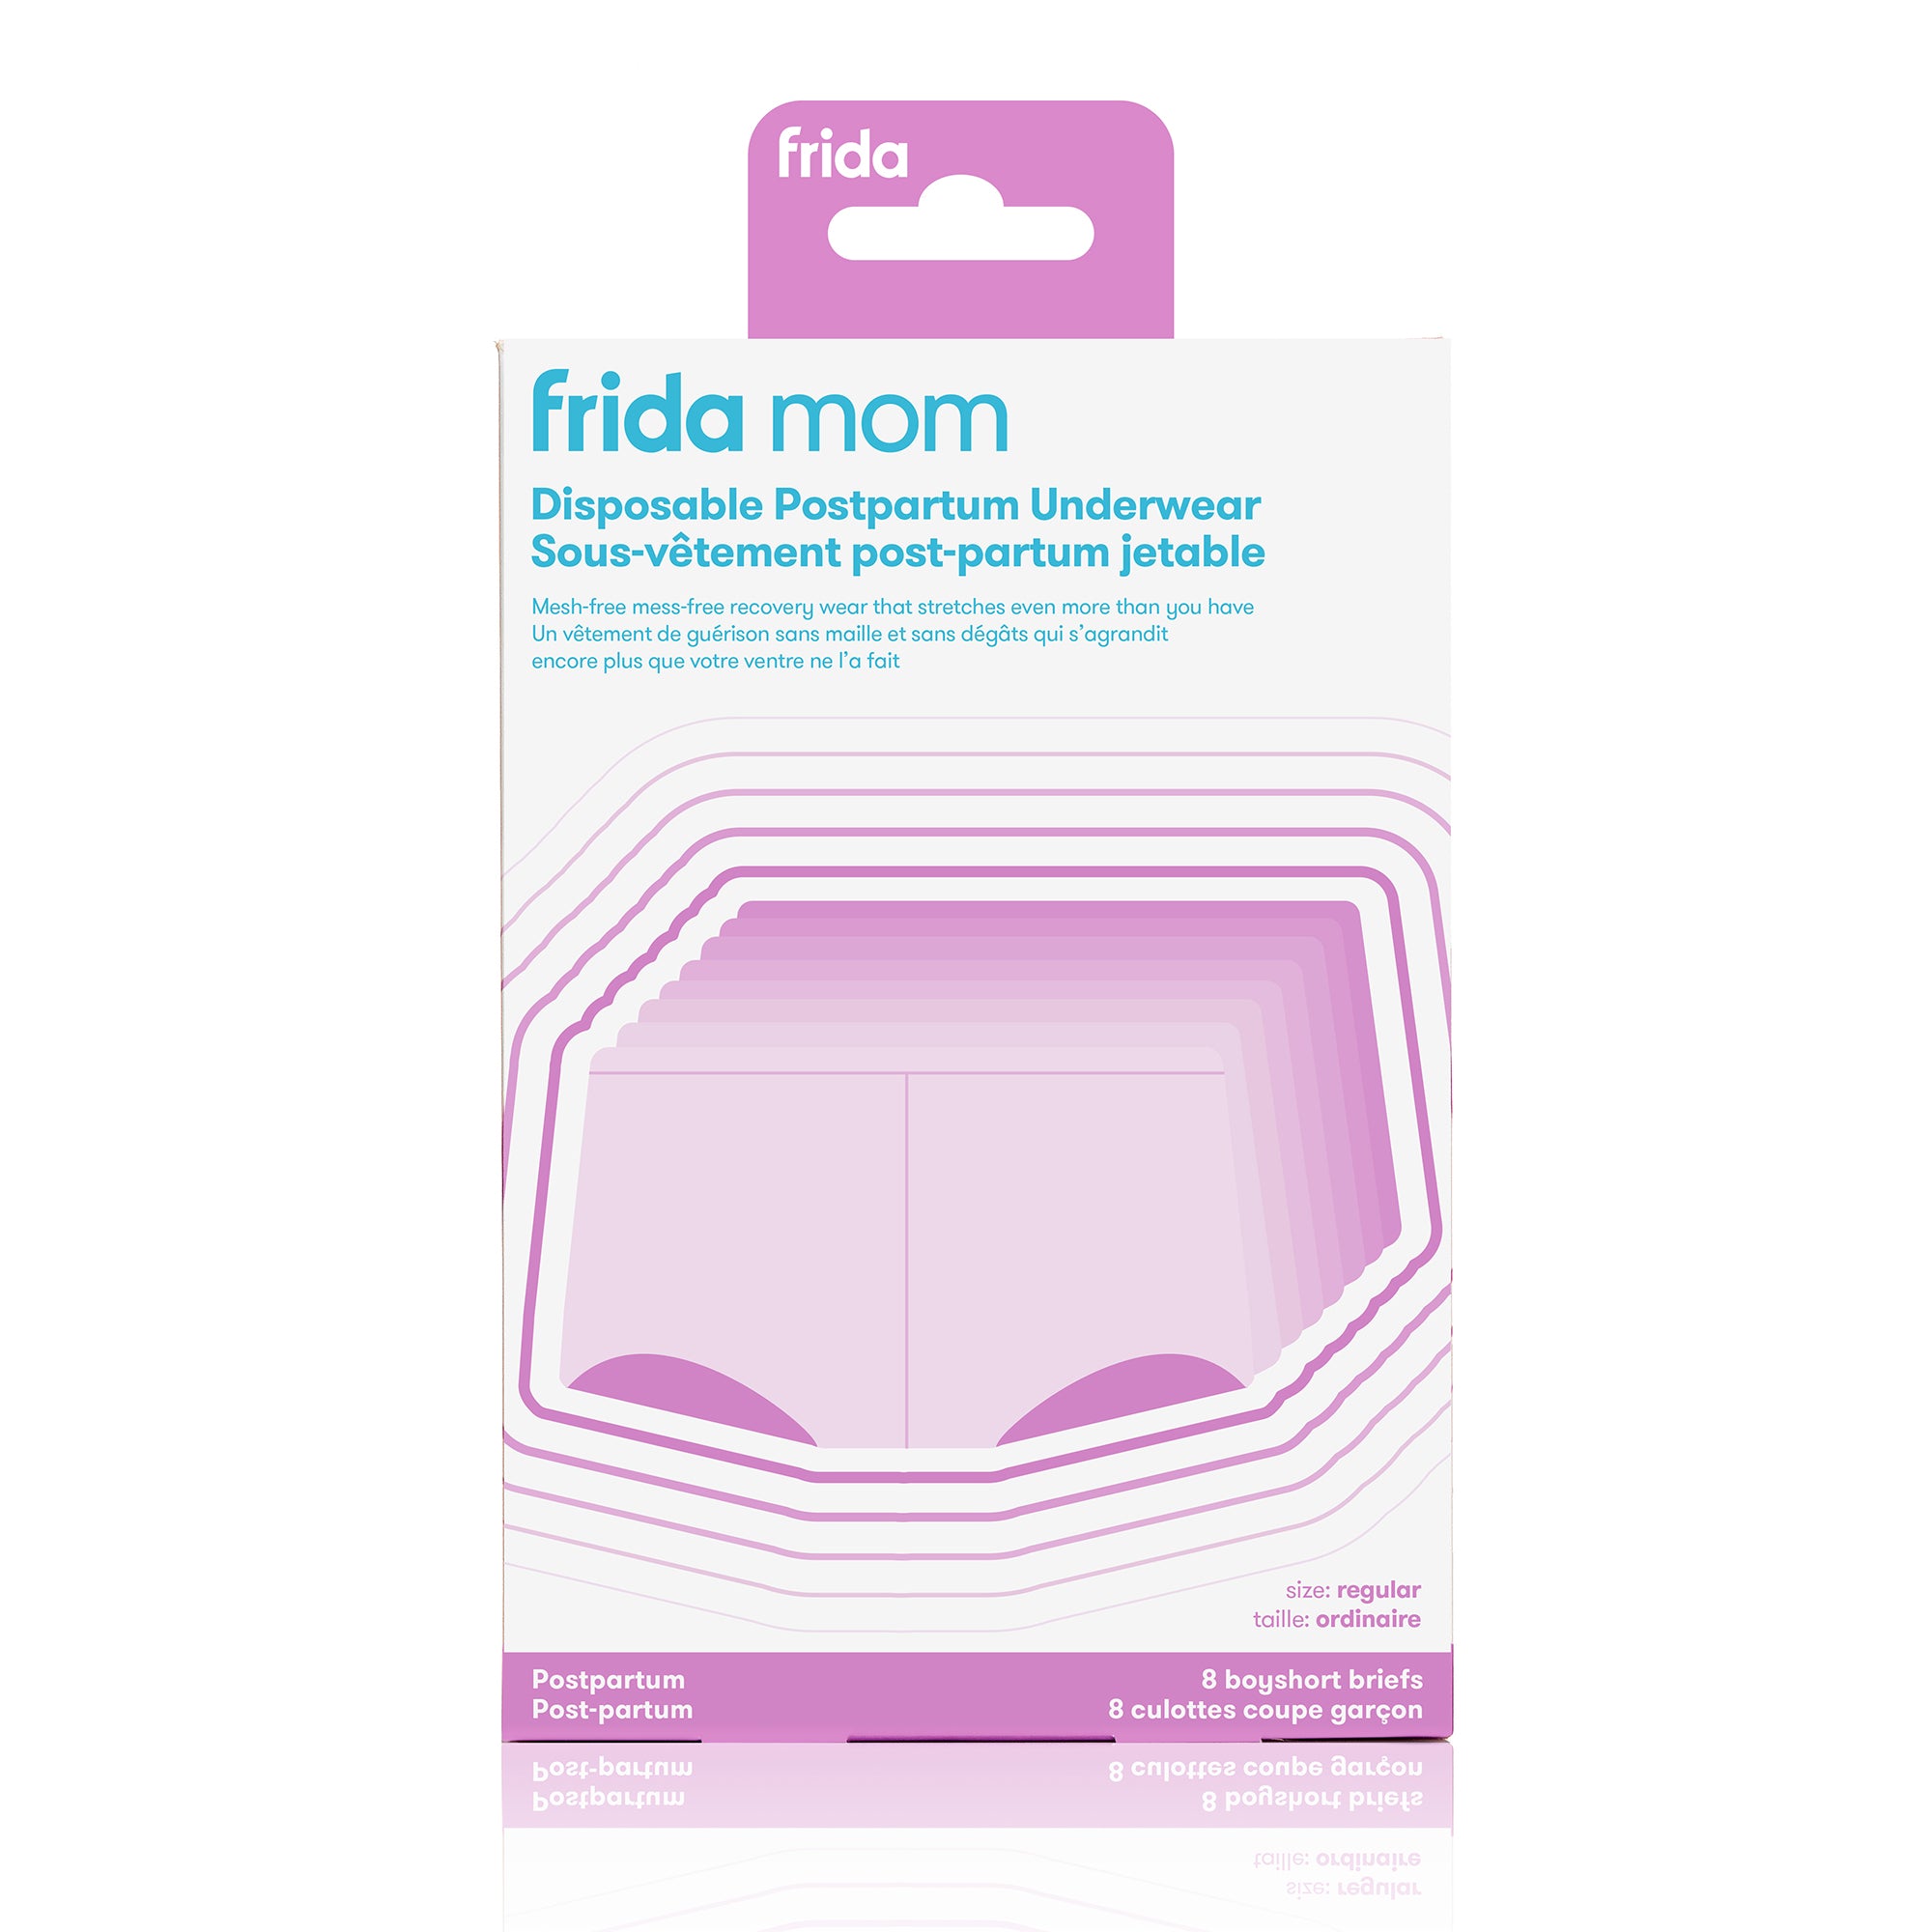 Frida Mom Disposable C-Section Postpartum Underwear Size Regular